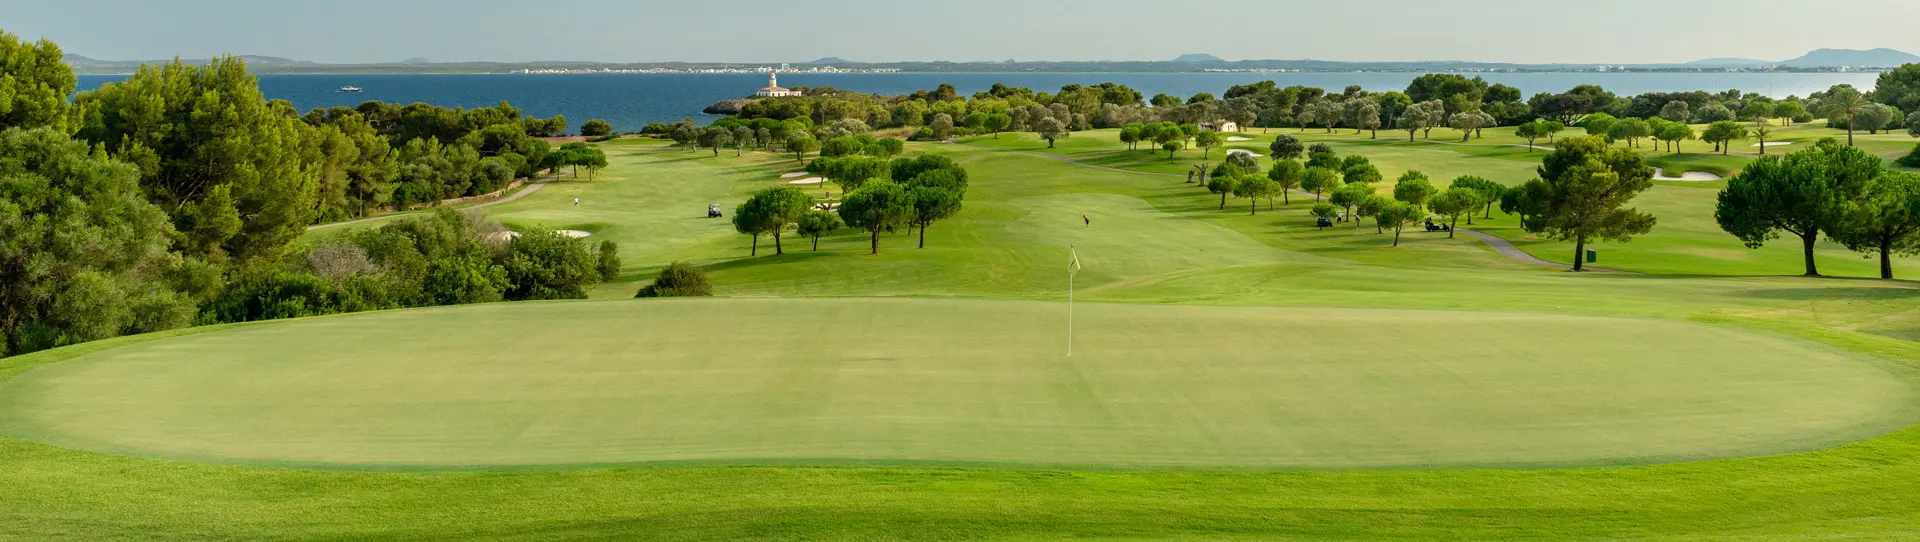 Spain golf courses - Alcanada Golf Course - Photo 1